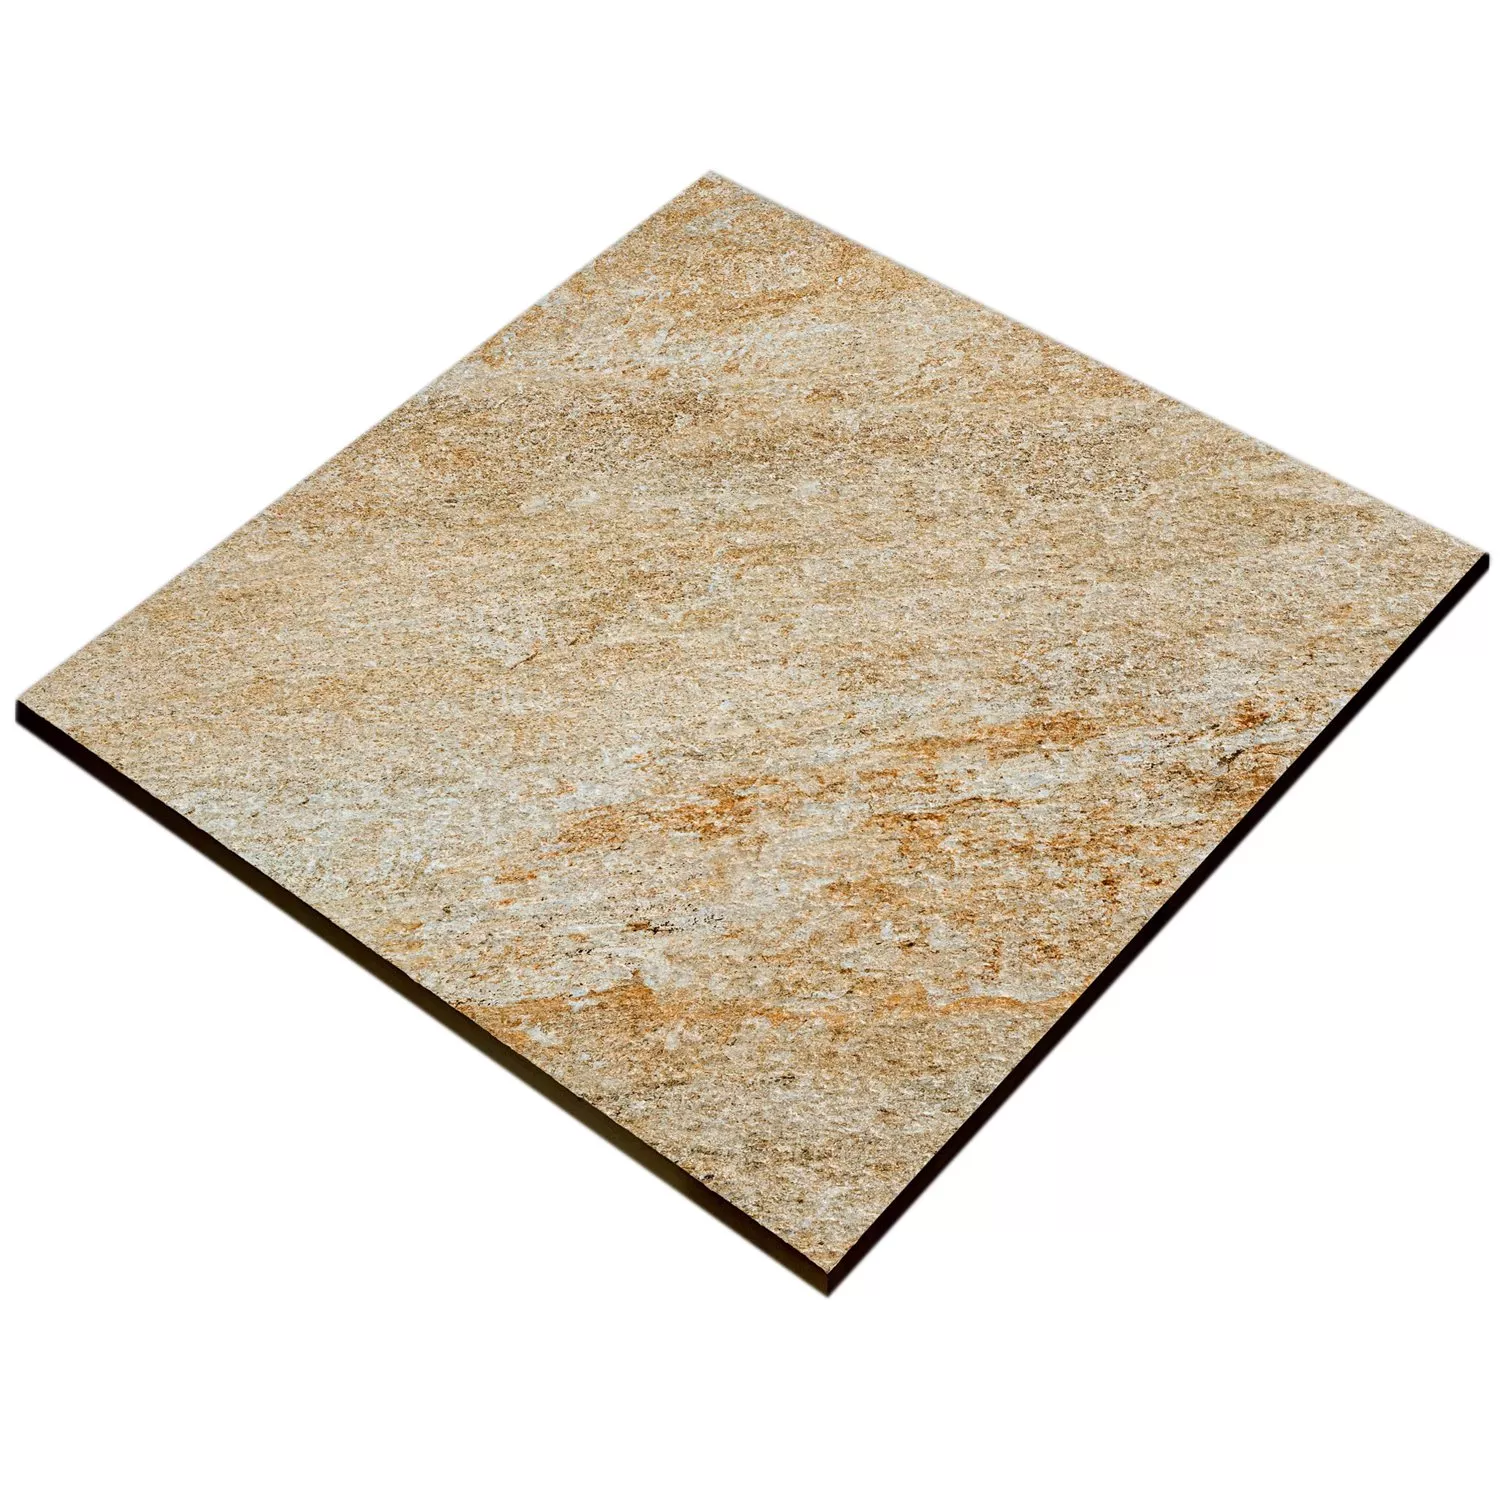 Sample Floor Tiles Stoneway Natural Stone Optic Beige